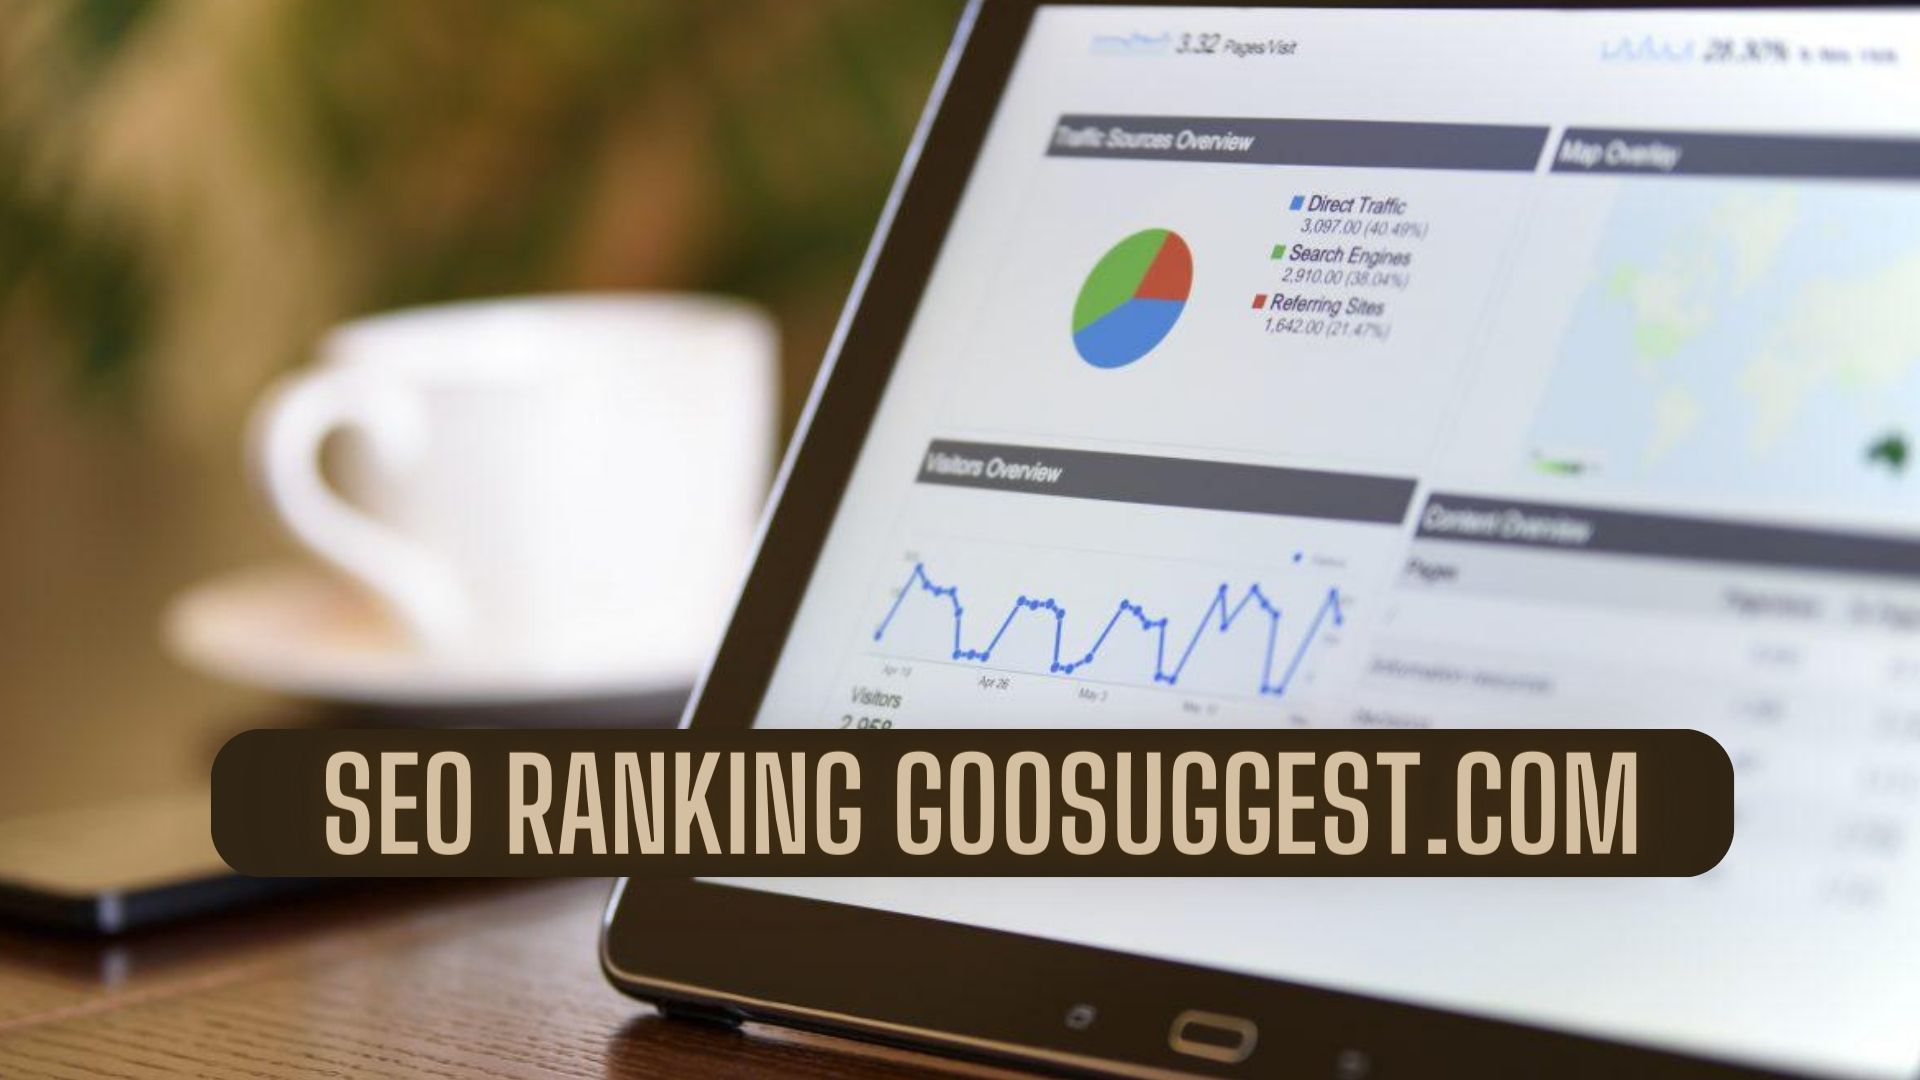 SEO Ranking goosuggest.com